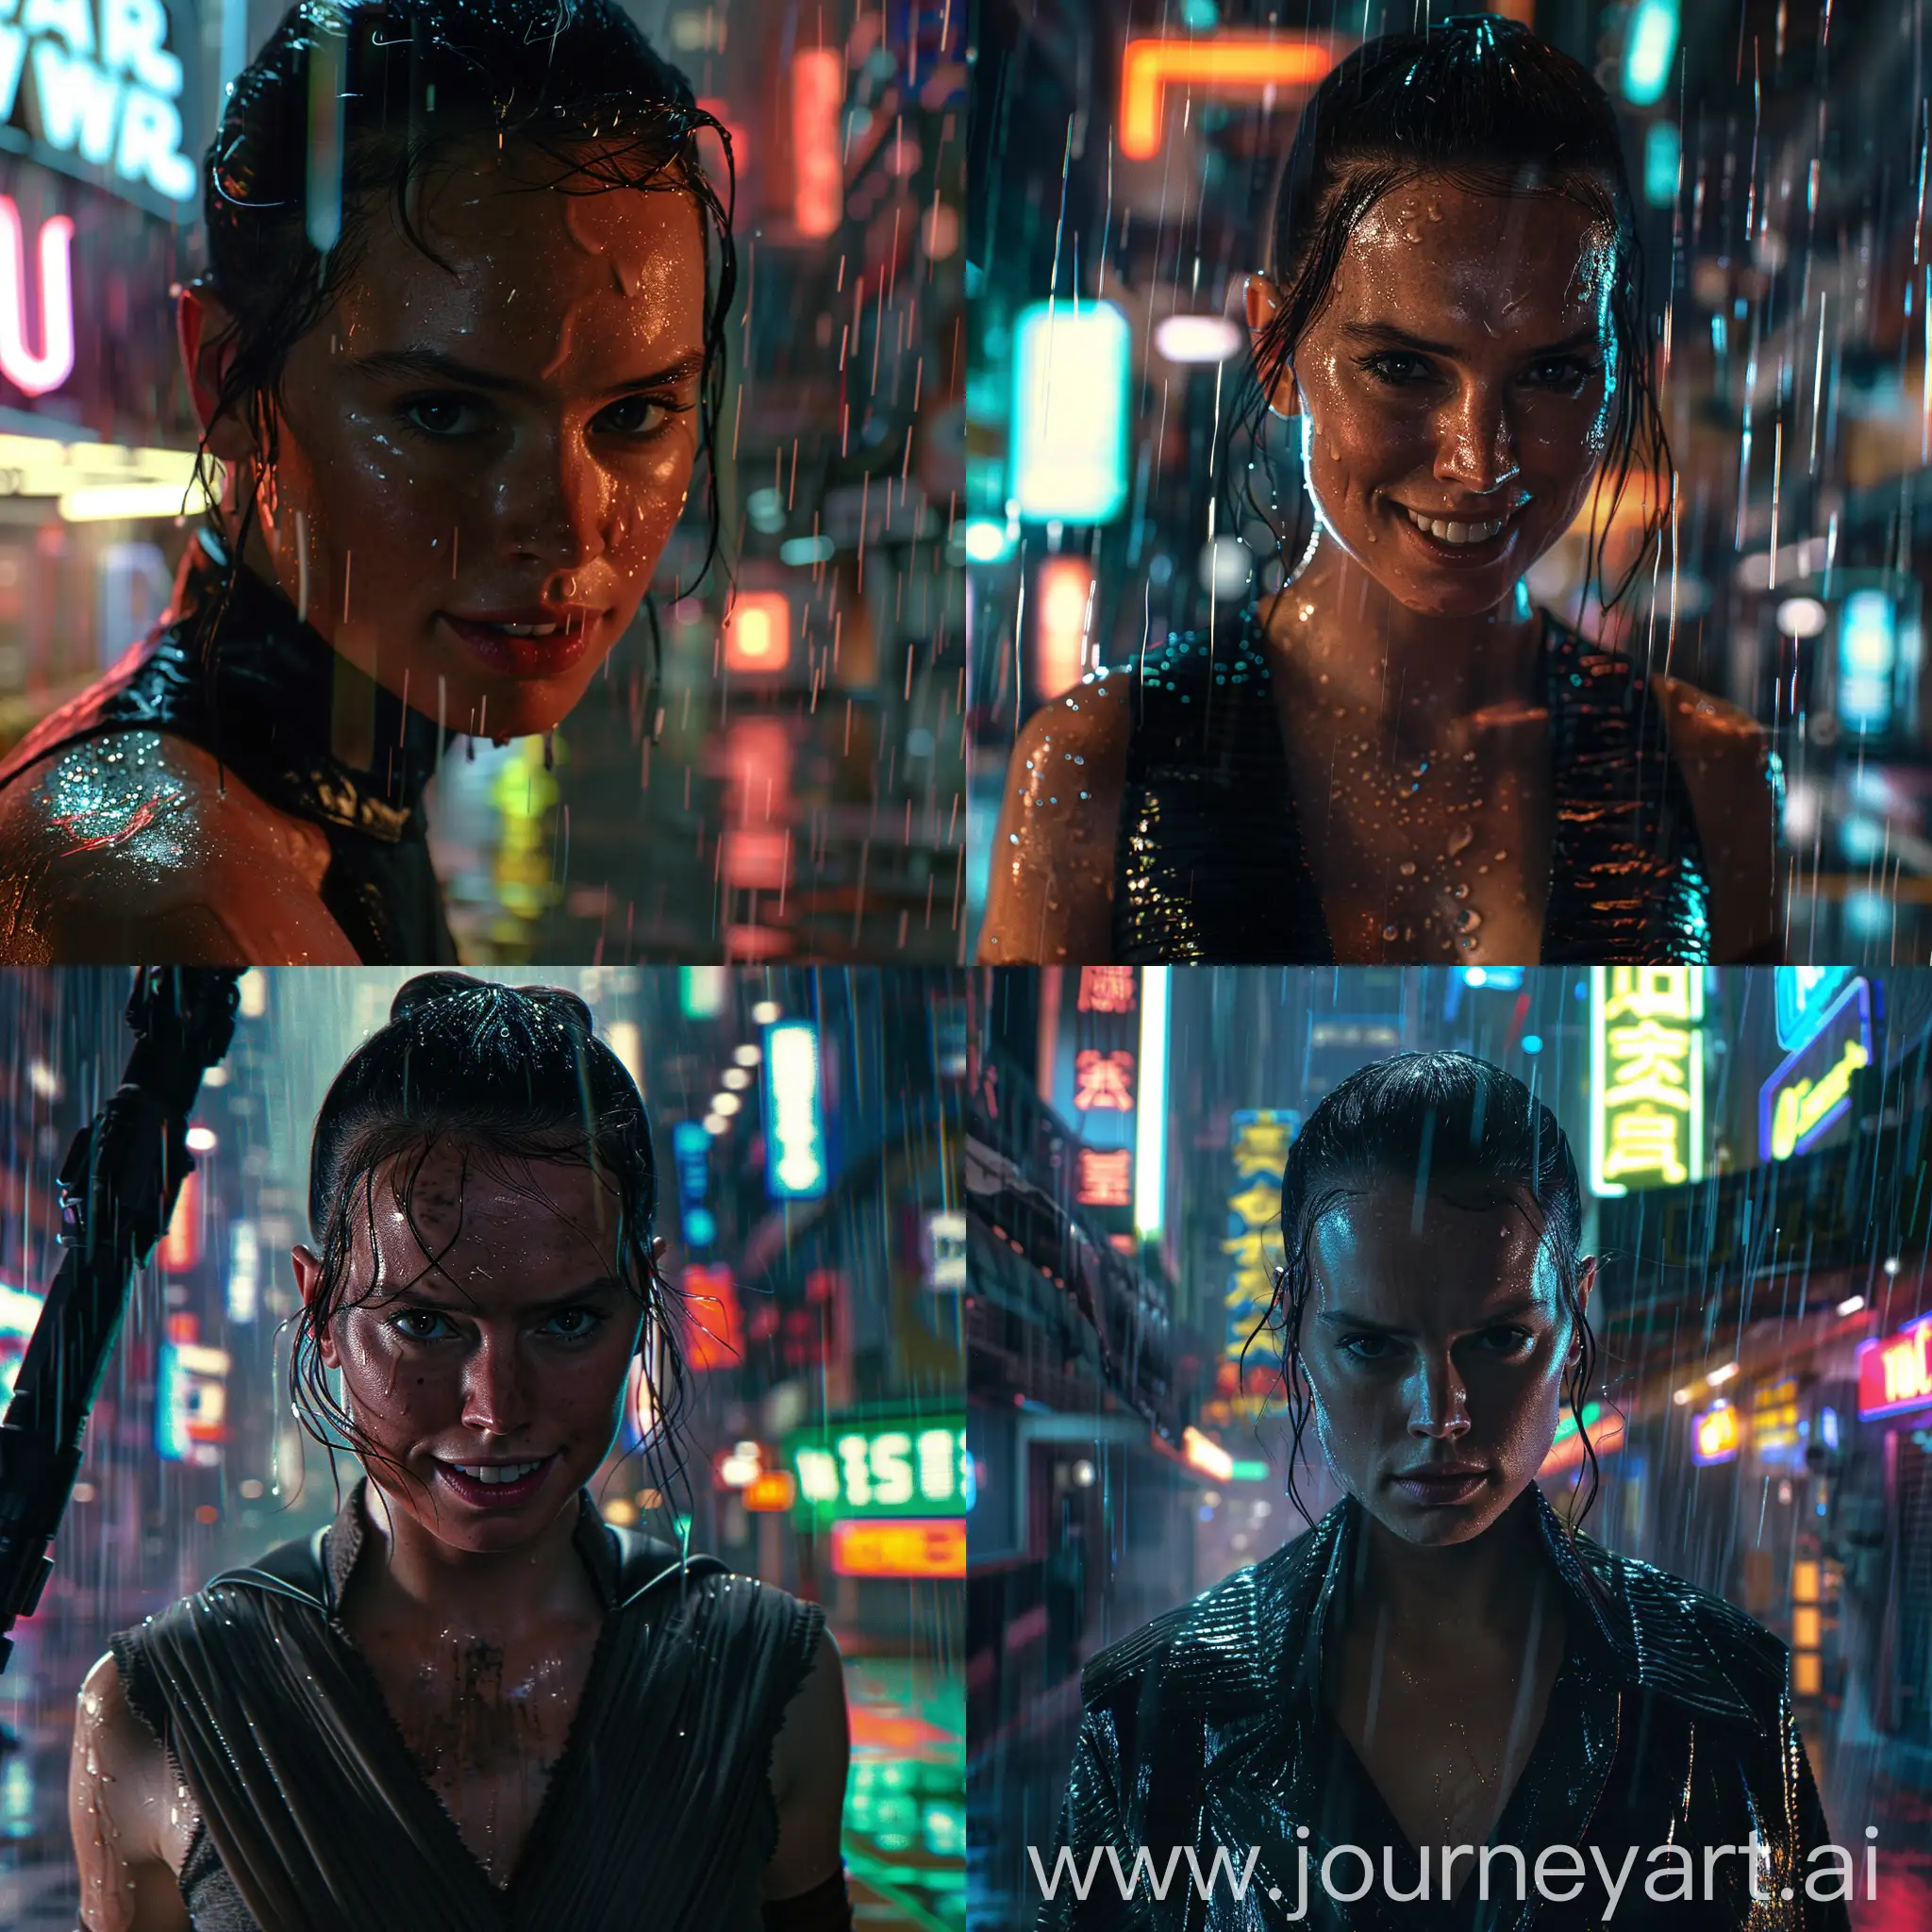 Cyberpunk-Daisy-Ridley-With-Rey-Skywalkers-Face-in-Neon-Rain